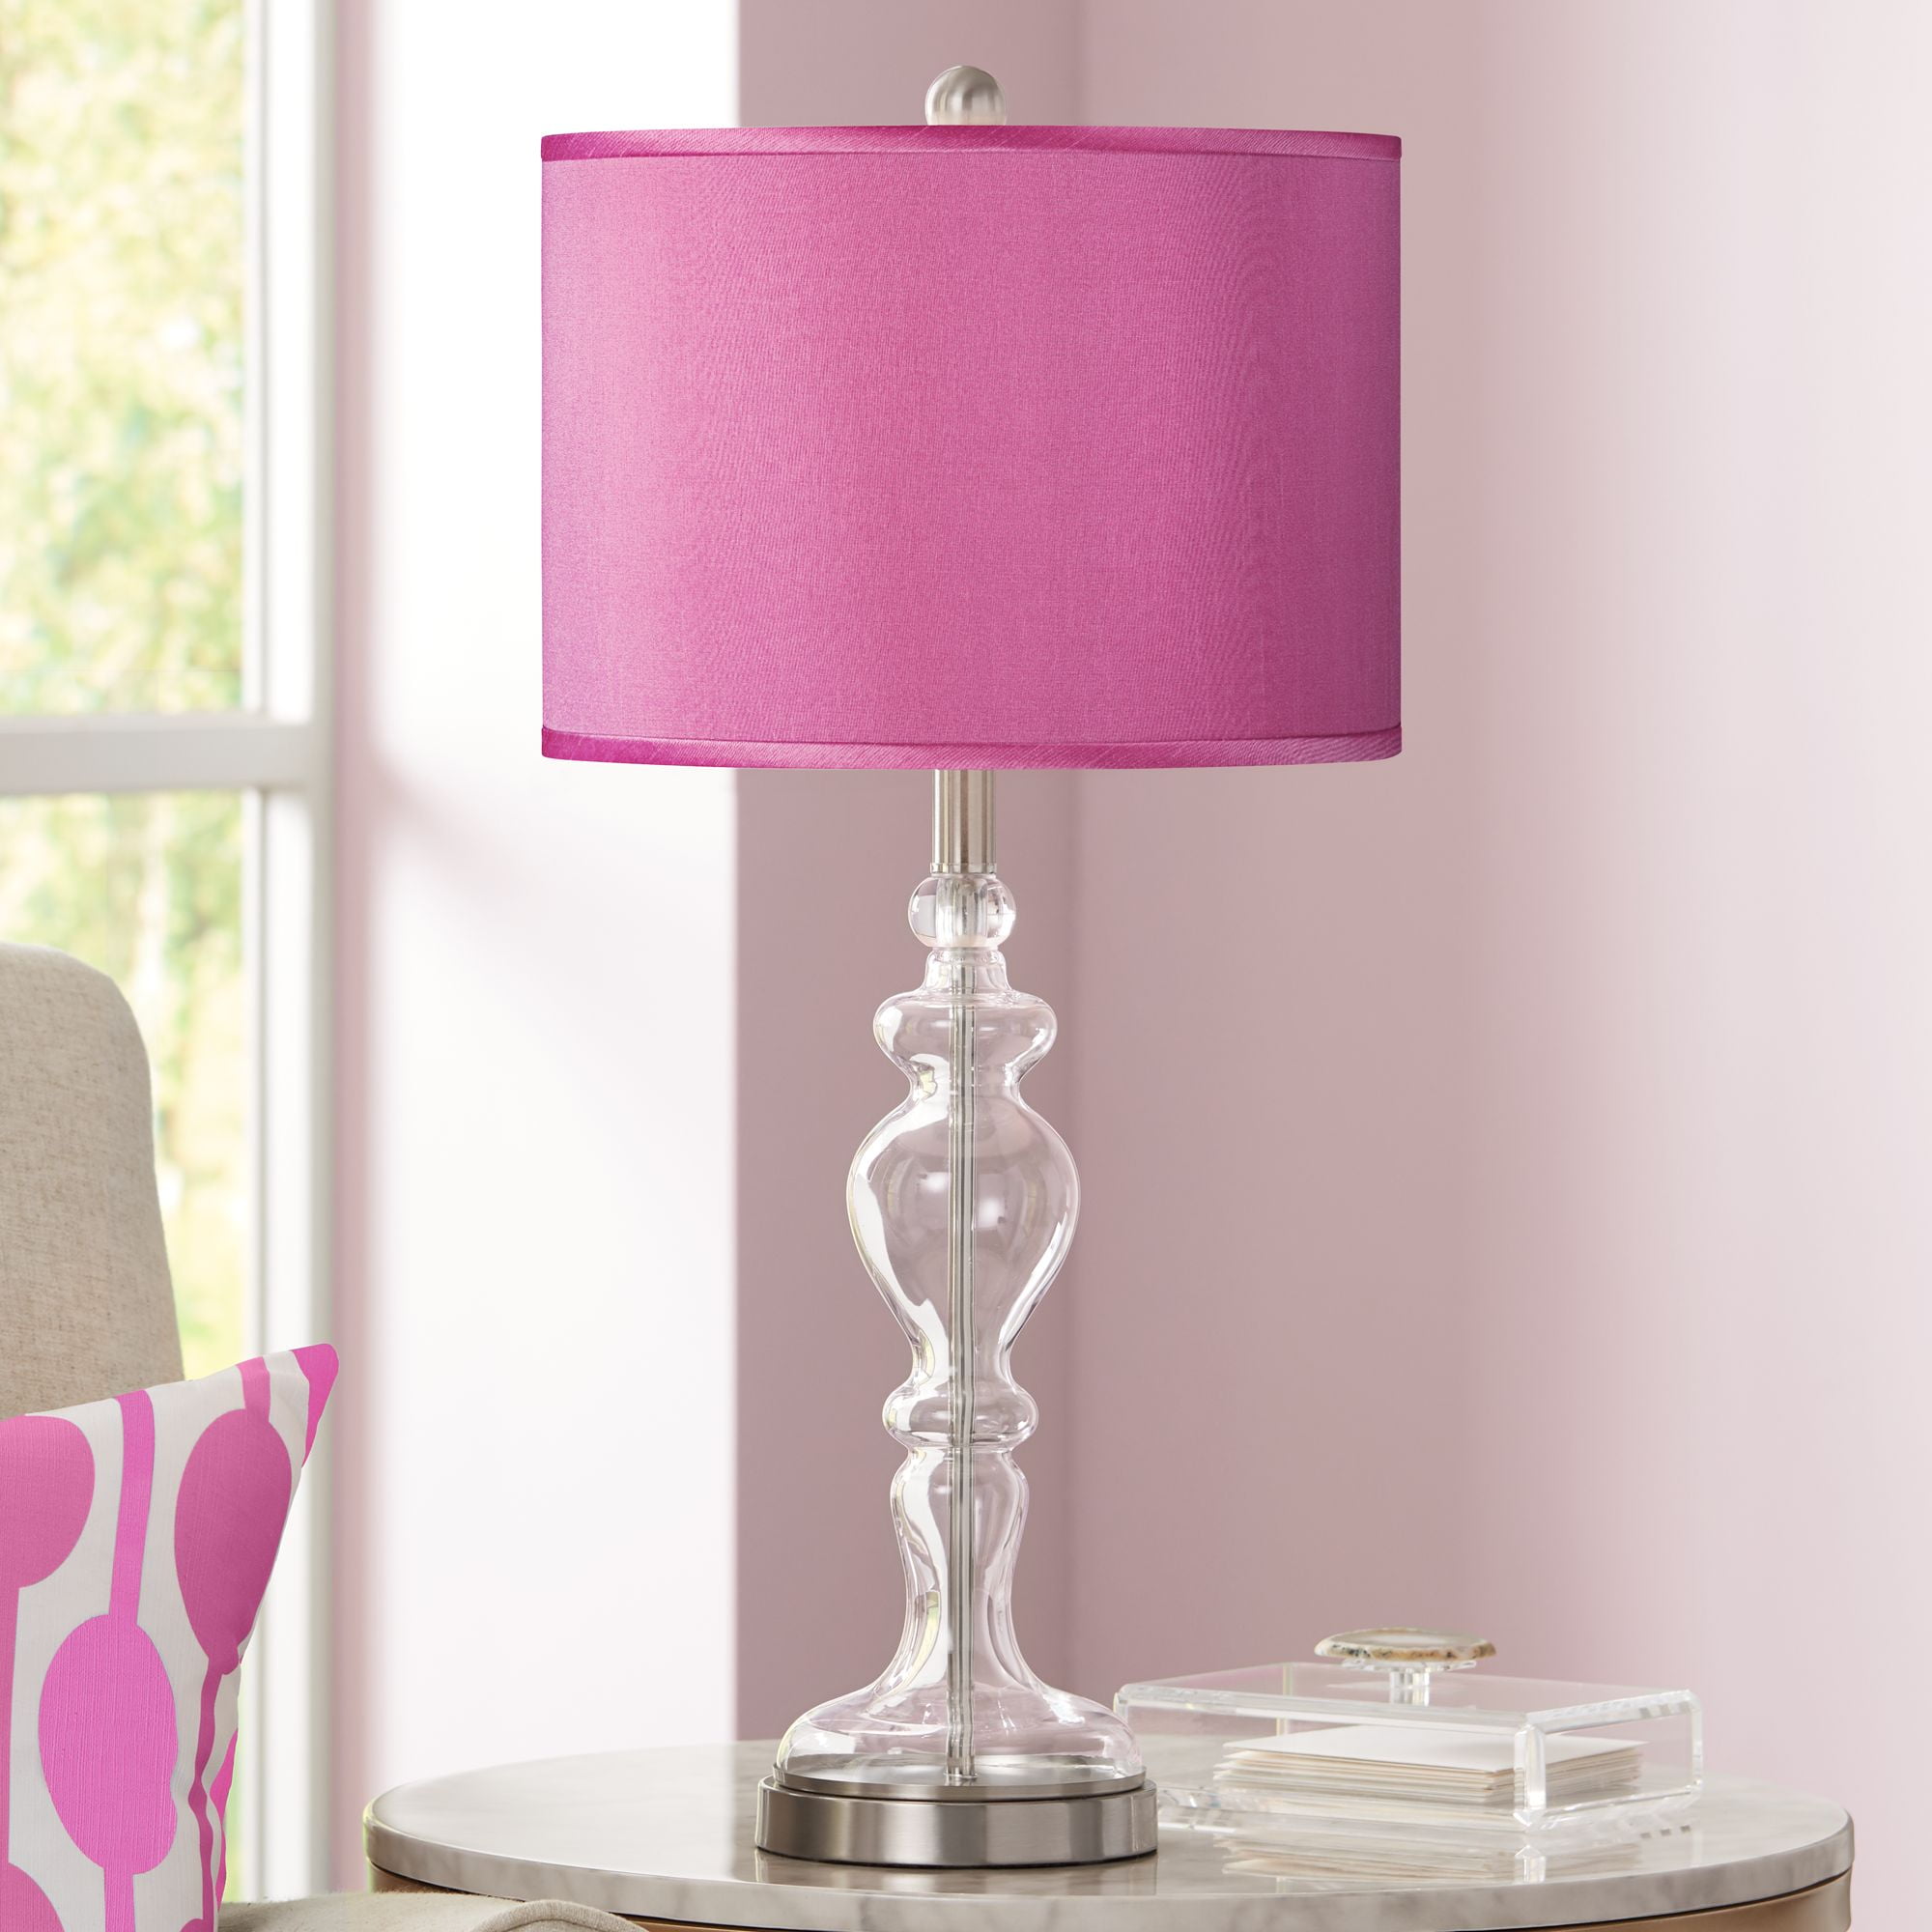 pink table lamp shade